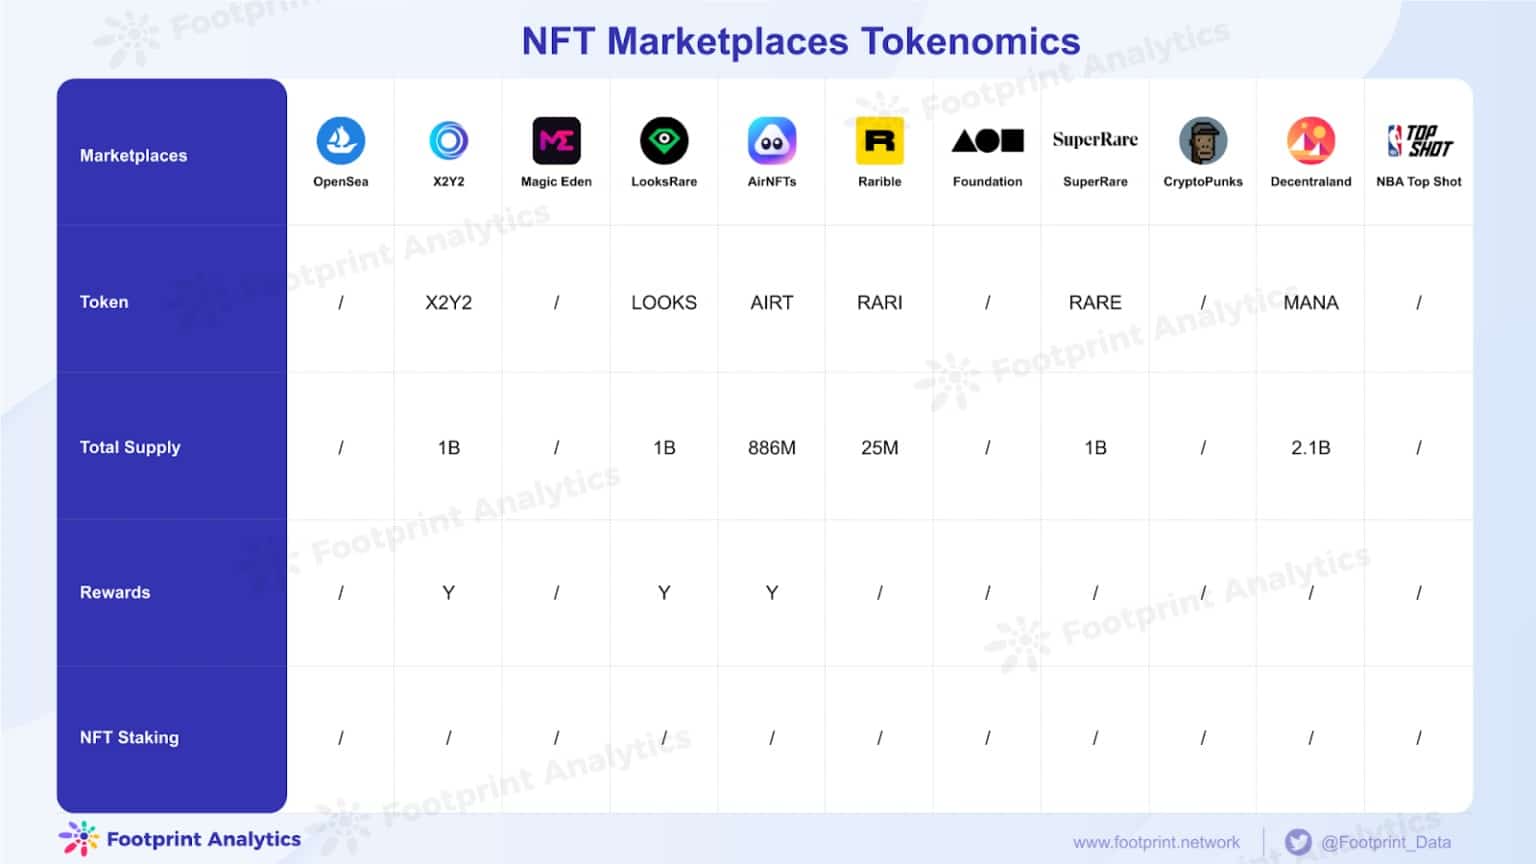 Footprint Analytics - Tokenomics NFT Marketplace